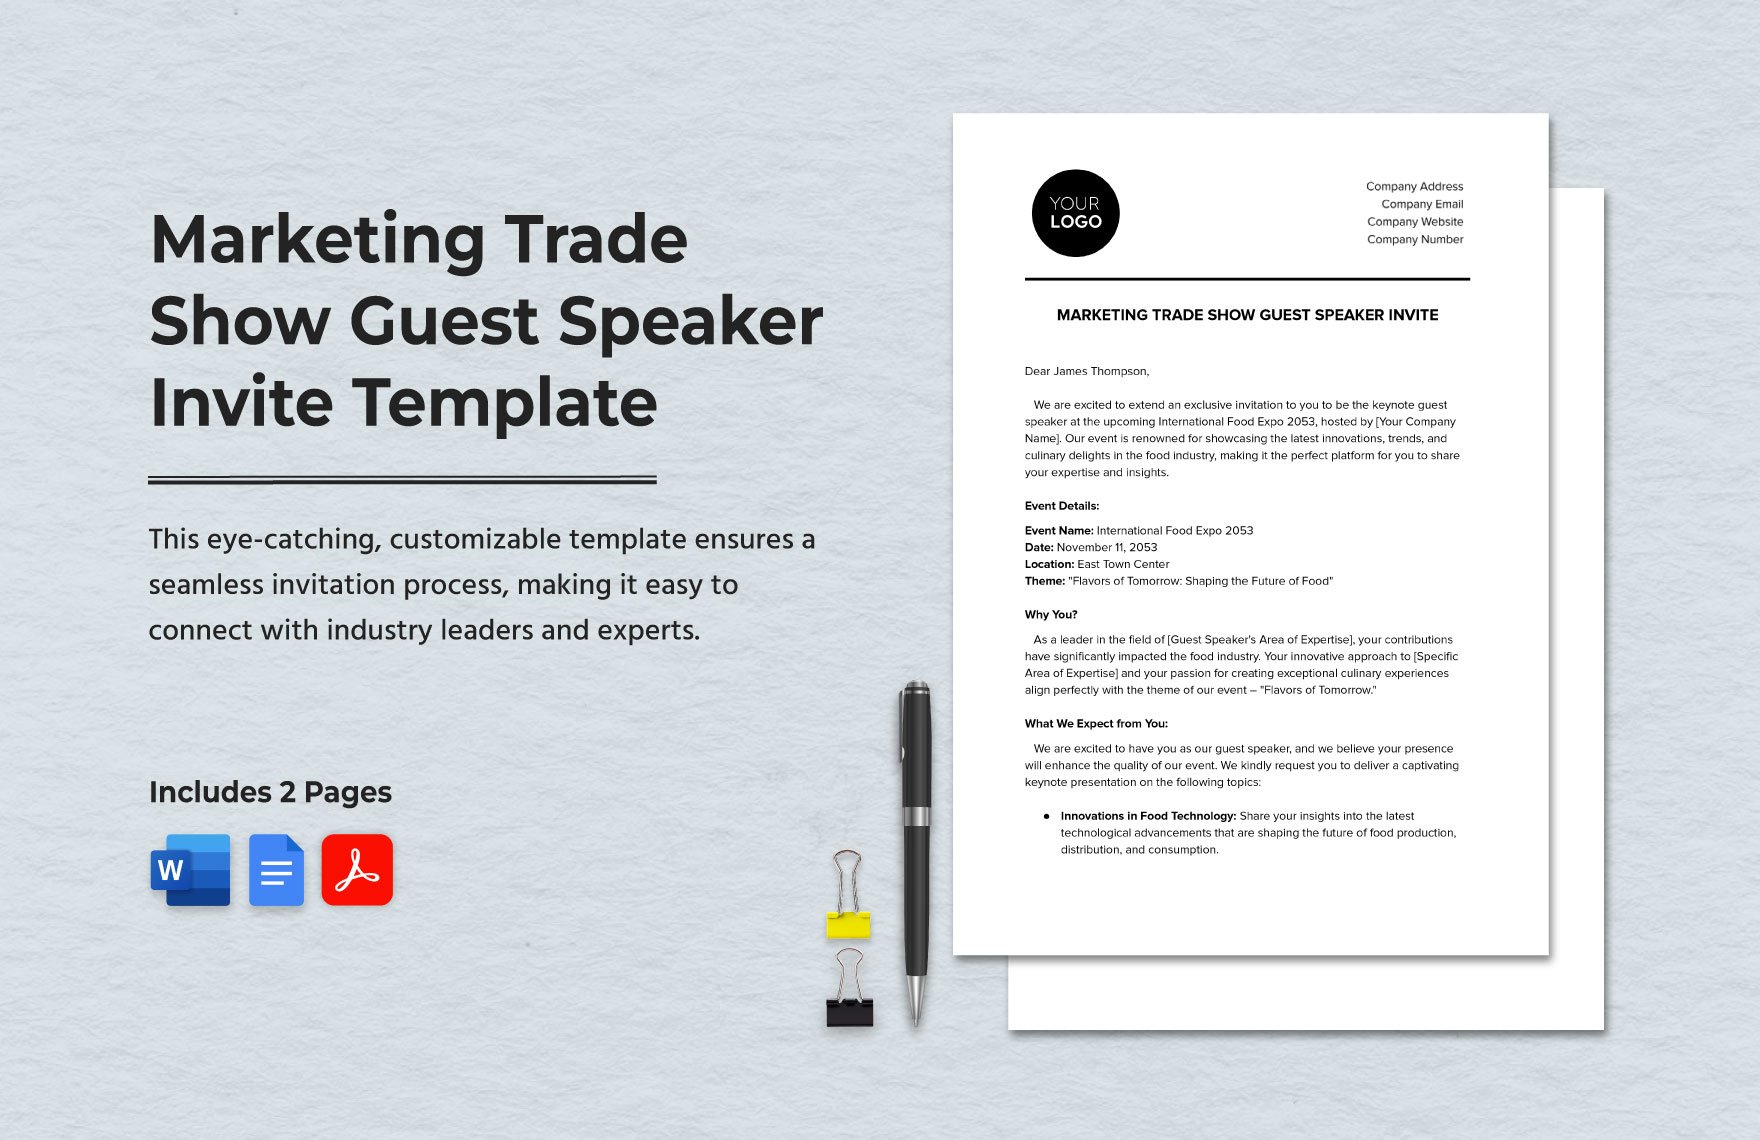 Marketing Trade Show Guest Speaker Invite Template in Word, Google Docs, PDF